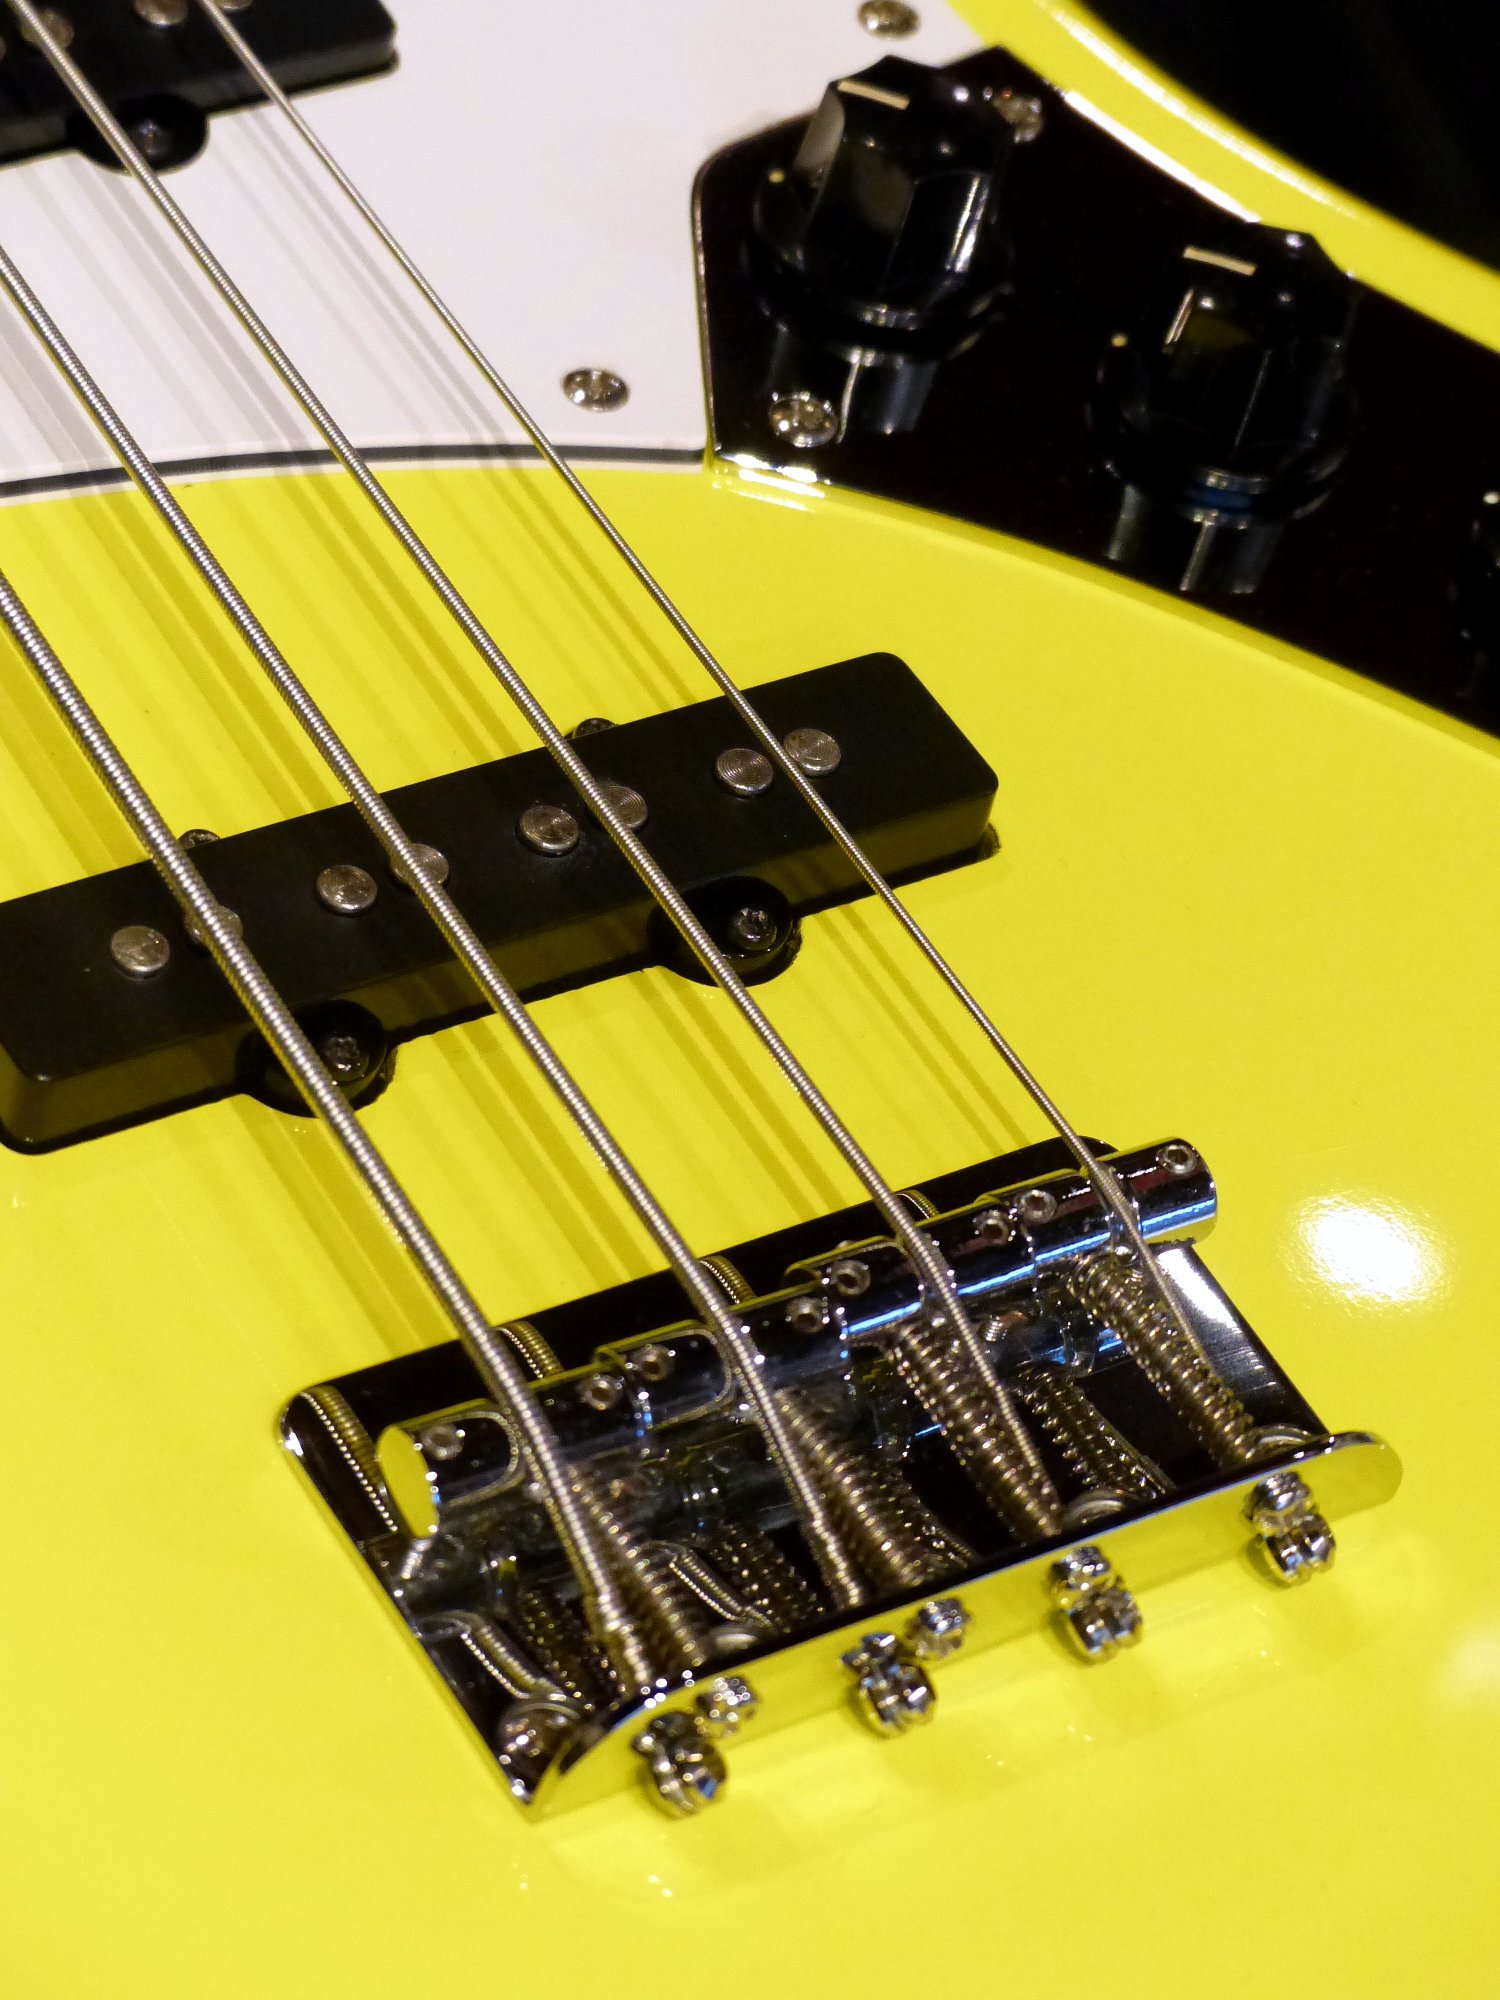 Grassroots G-JB-55R Jazz Bass Model – 京町家のギターショップ